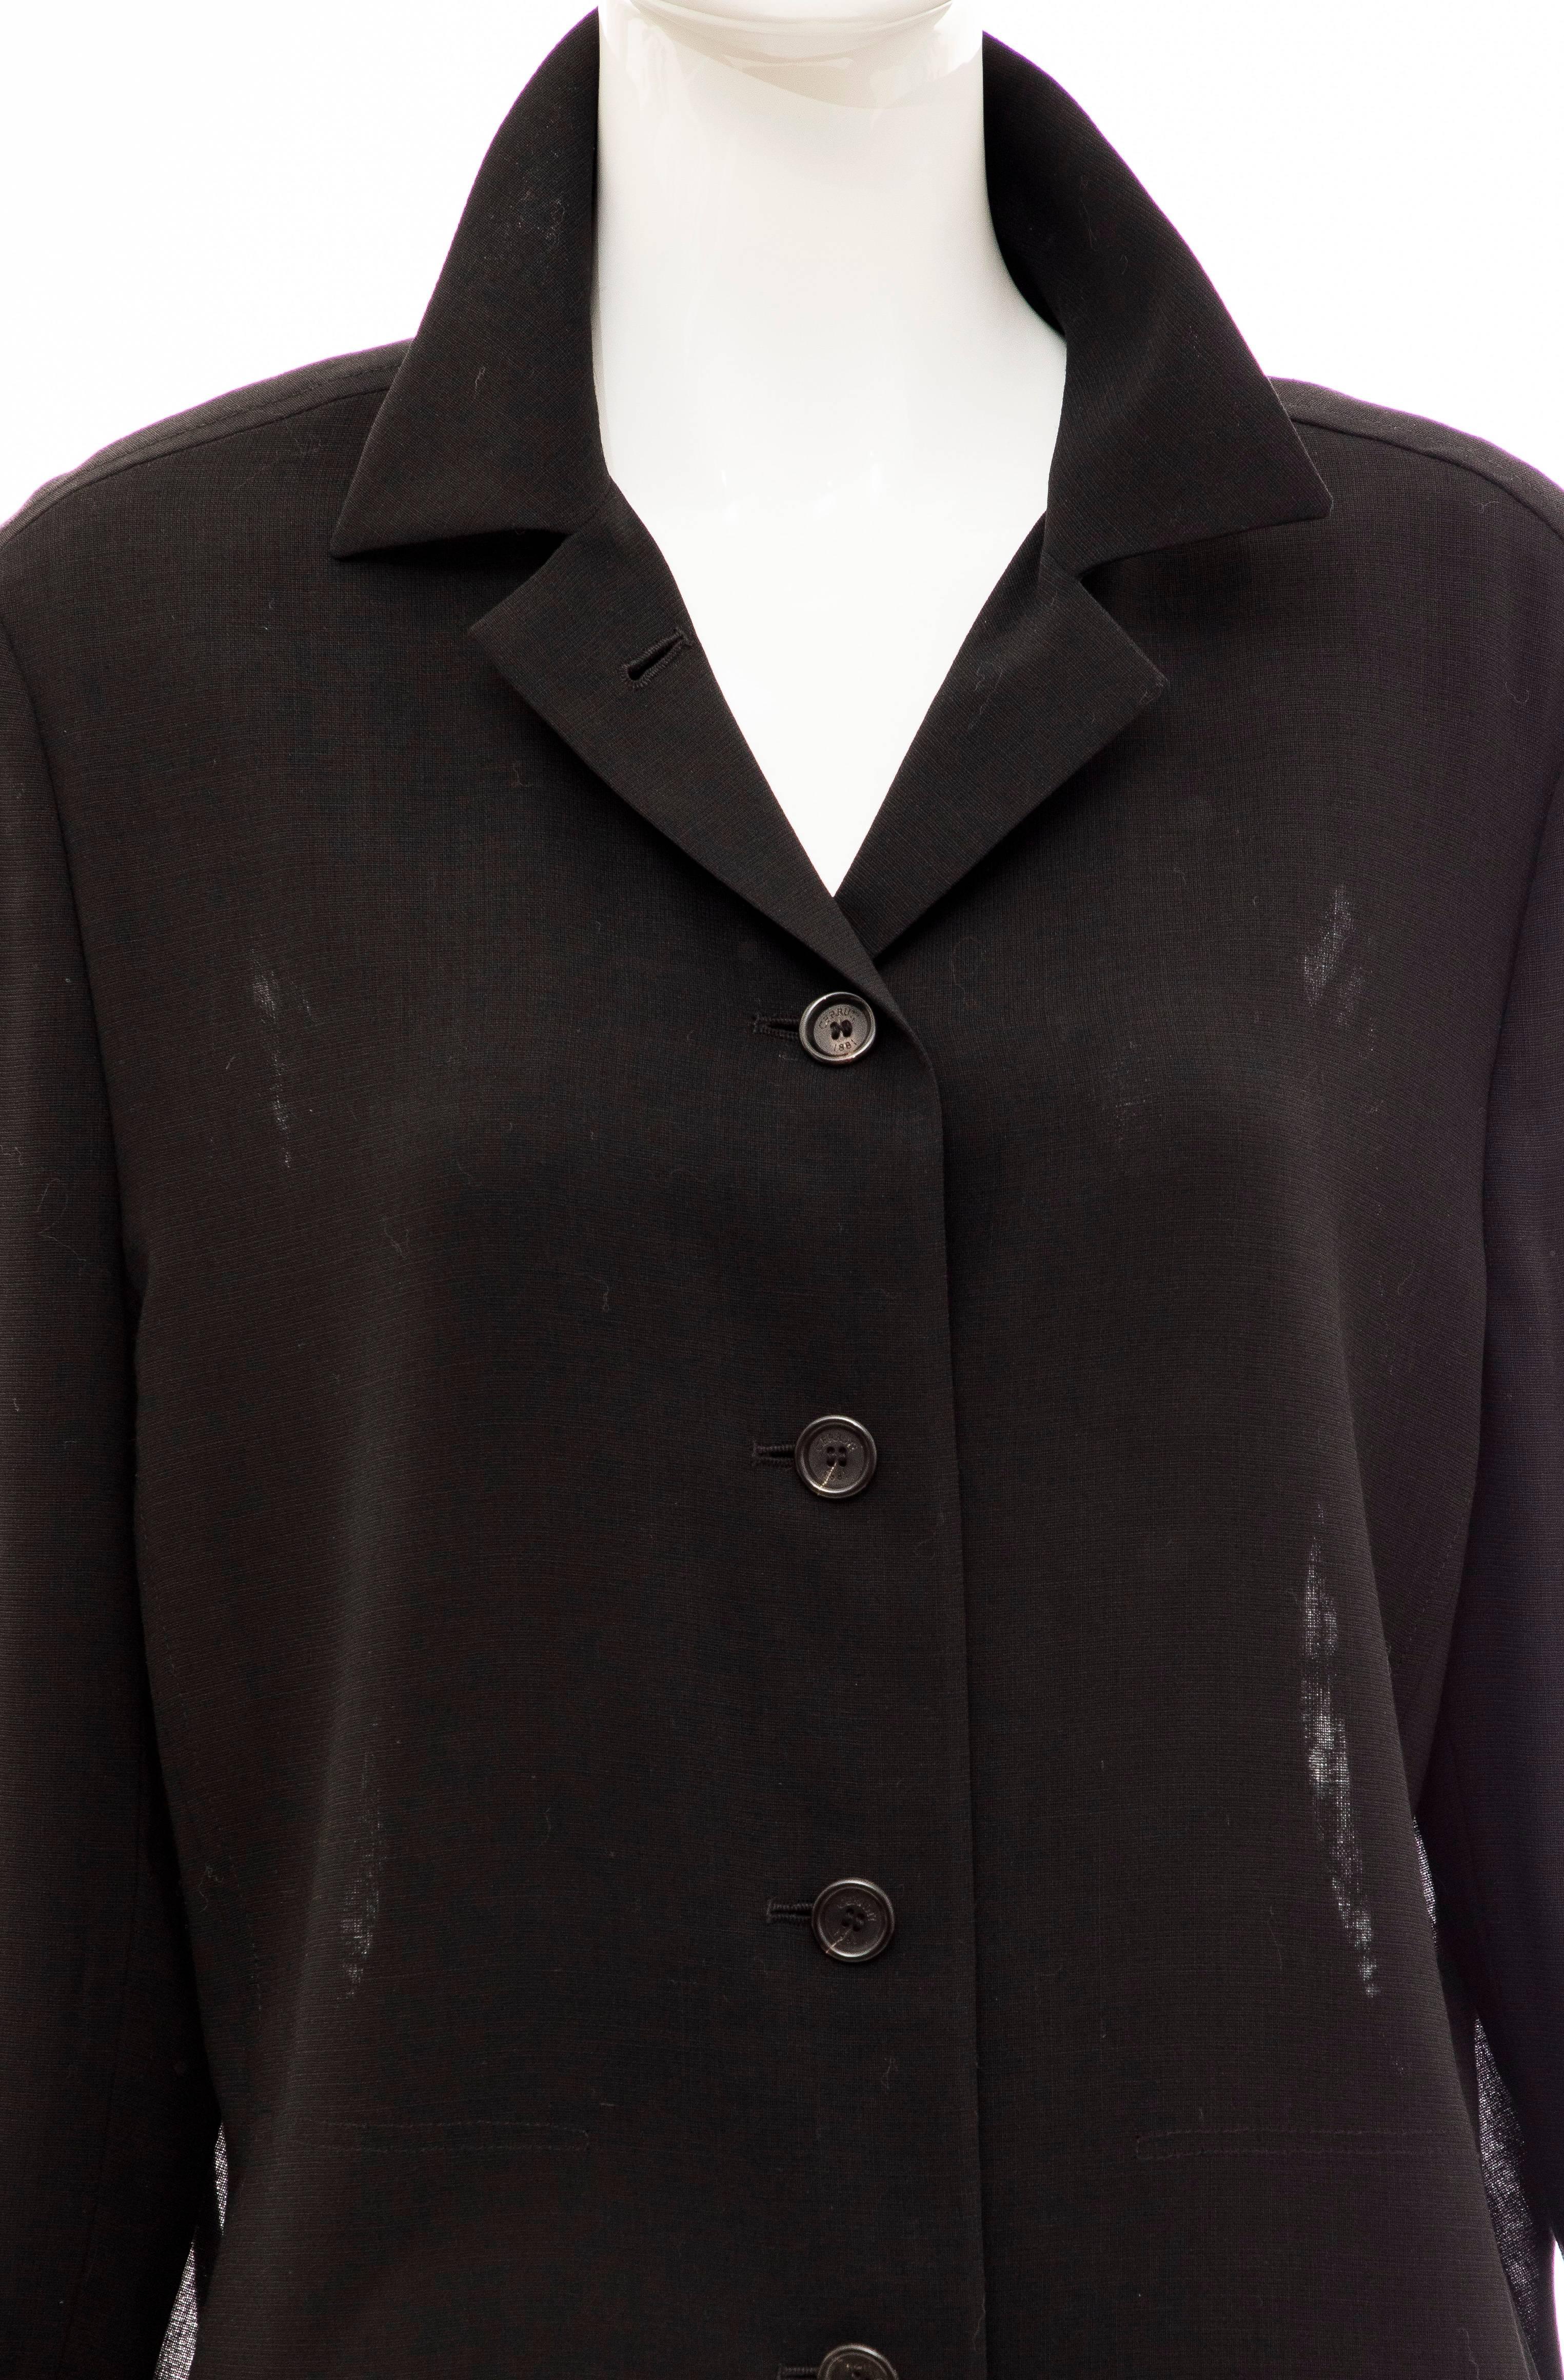 Cerruti 1881 Black Lightweight Wool Gauze Skirt-Suit, Circa 1990's For Sale 3